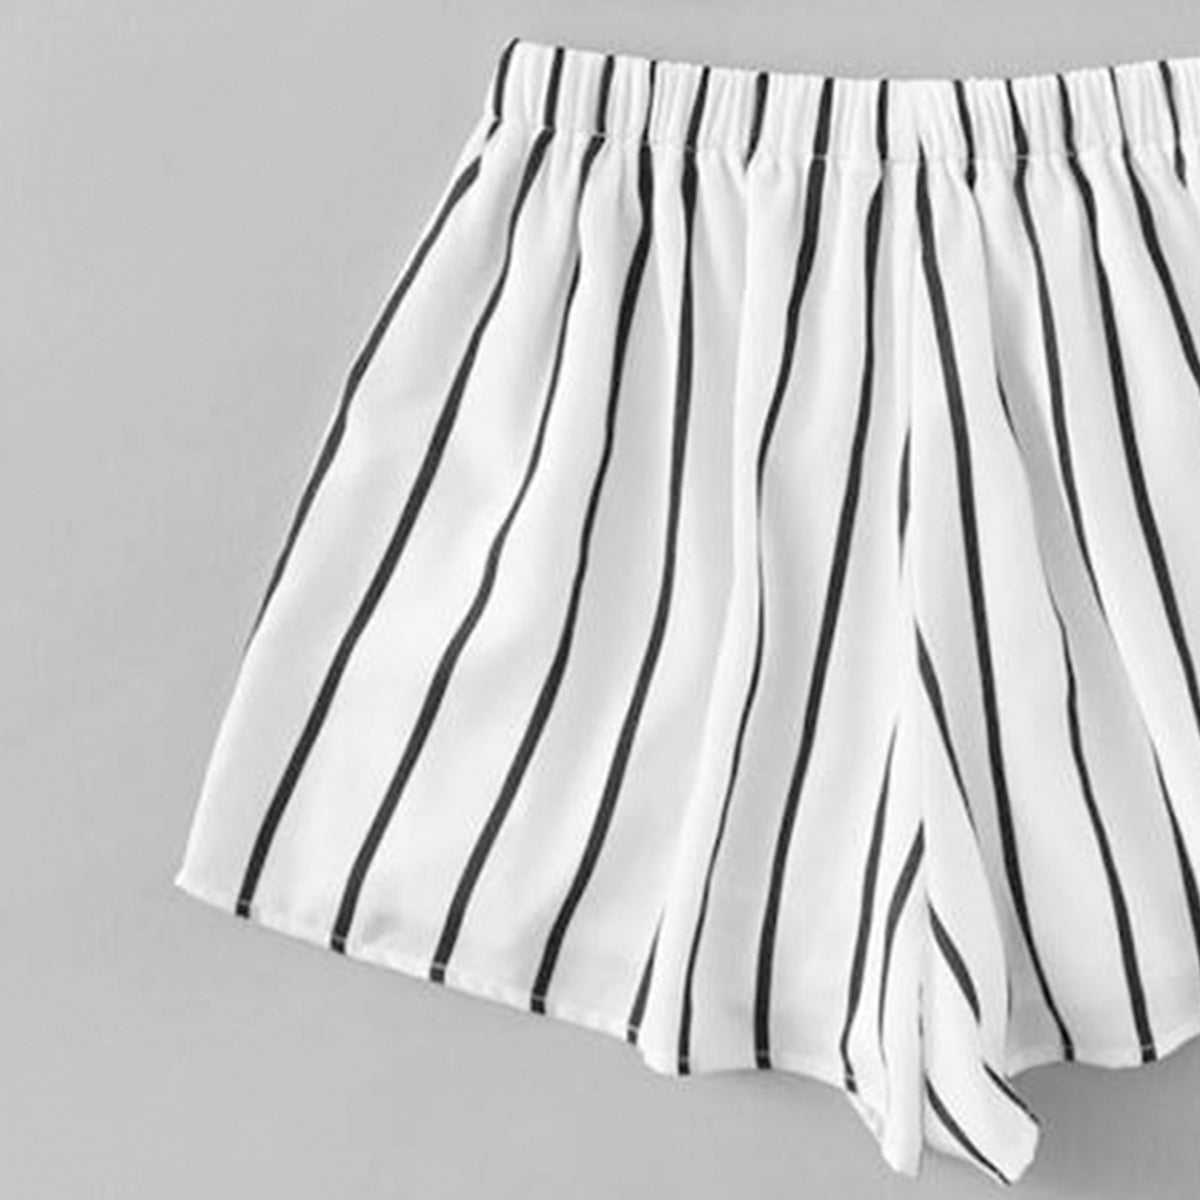 Venutaloza Toddler Girls White Lining Print Waist Shorts.